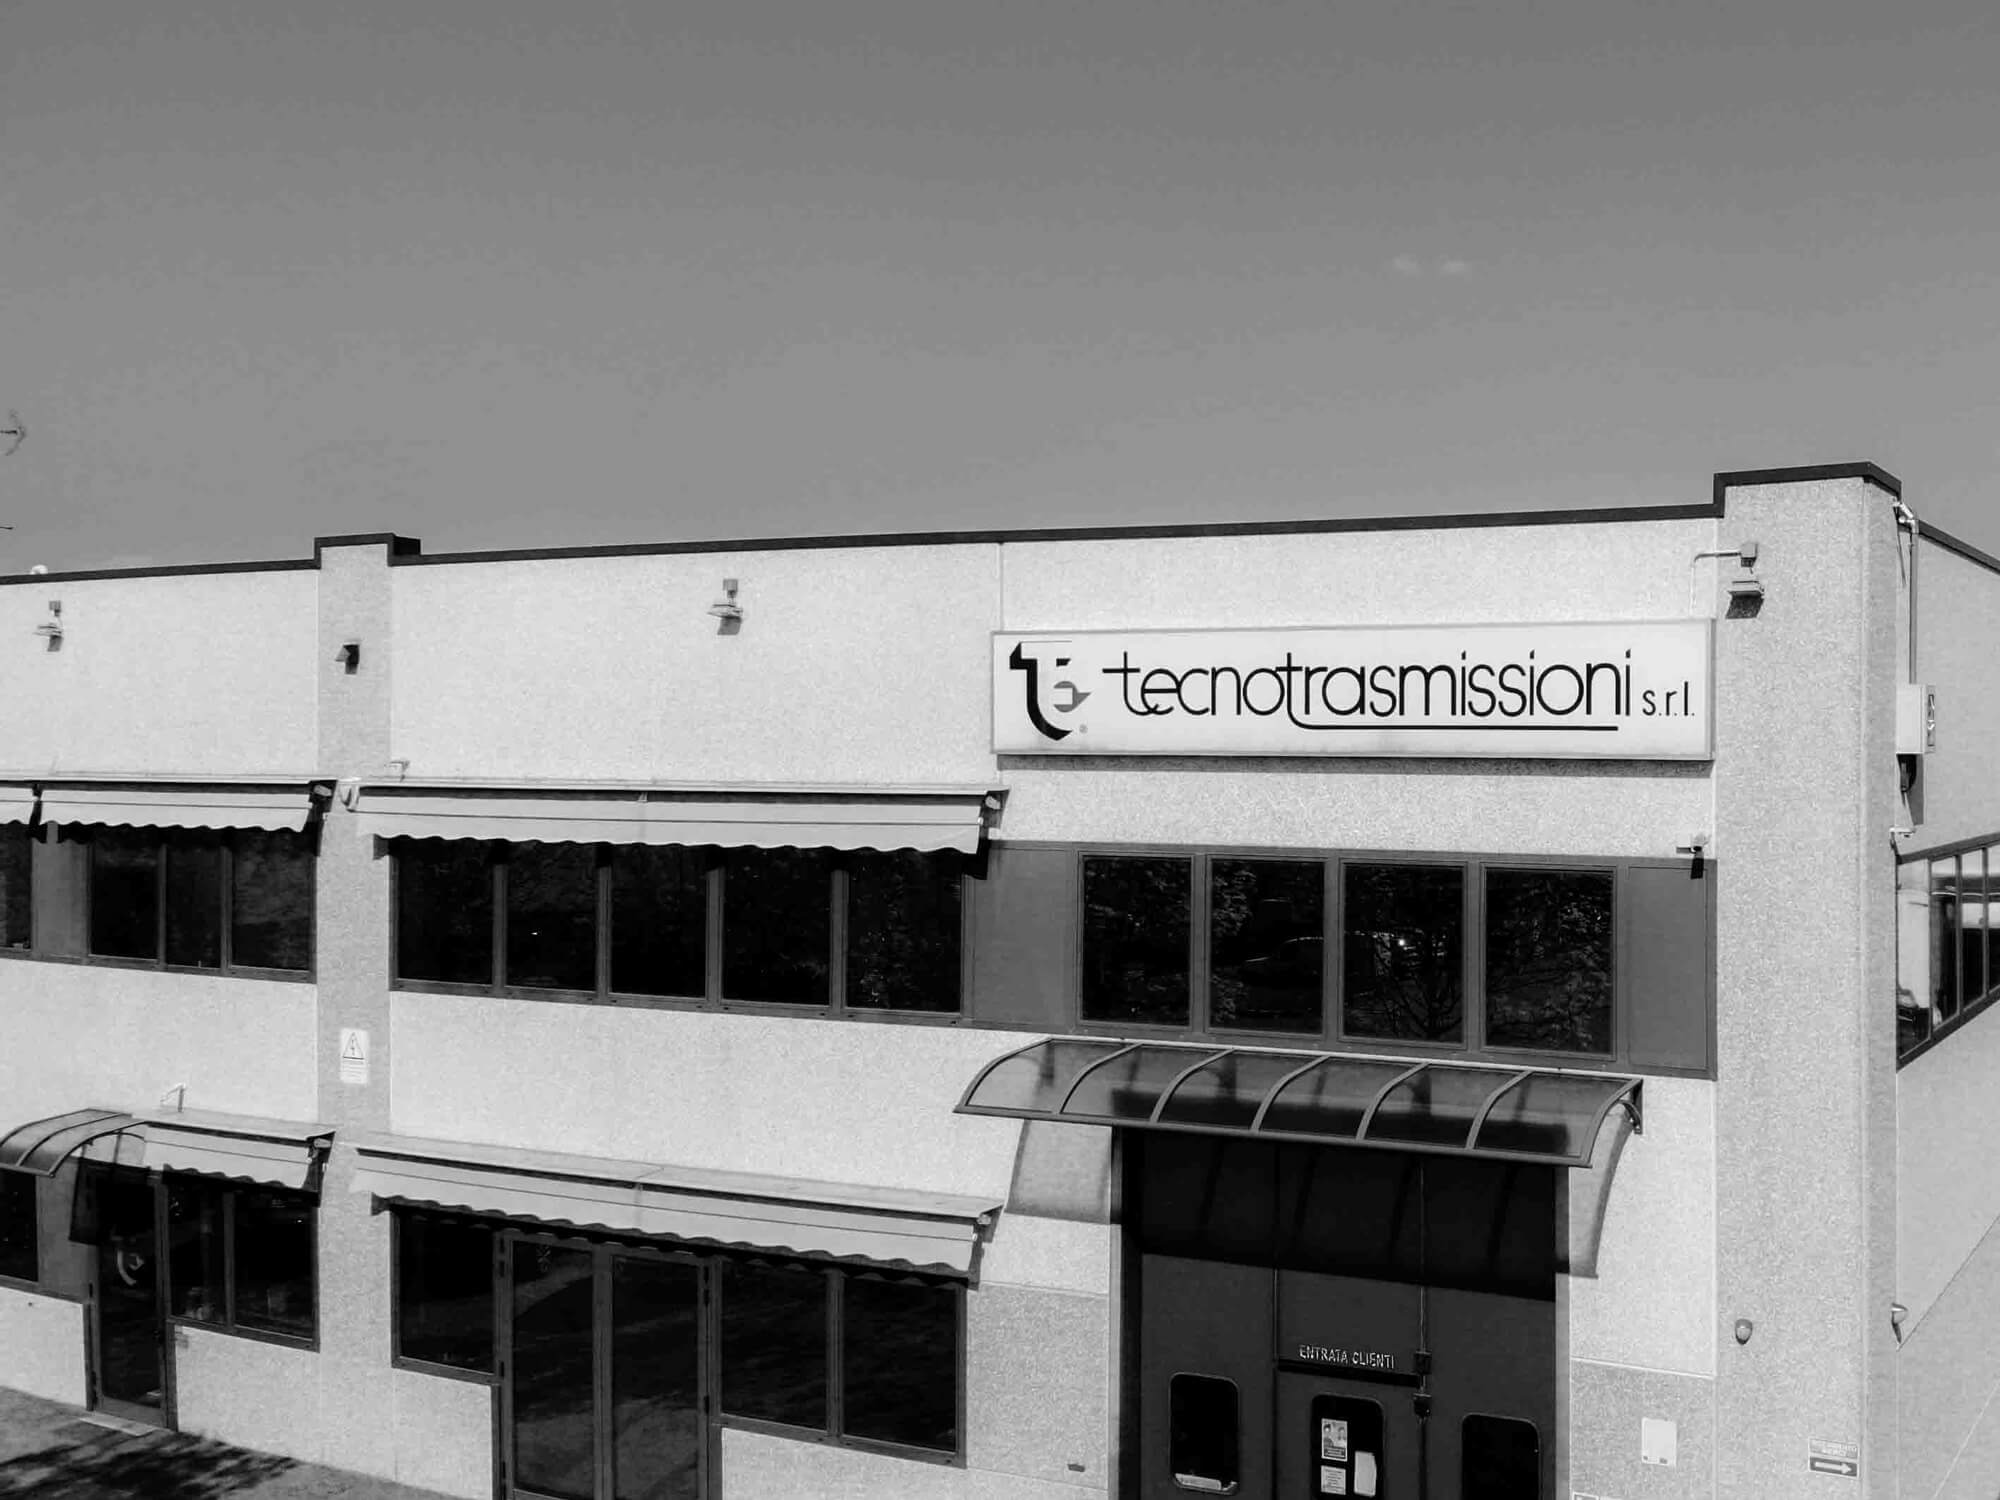 Tecnotrasmissioni Srl Italy - Company headquarters